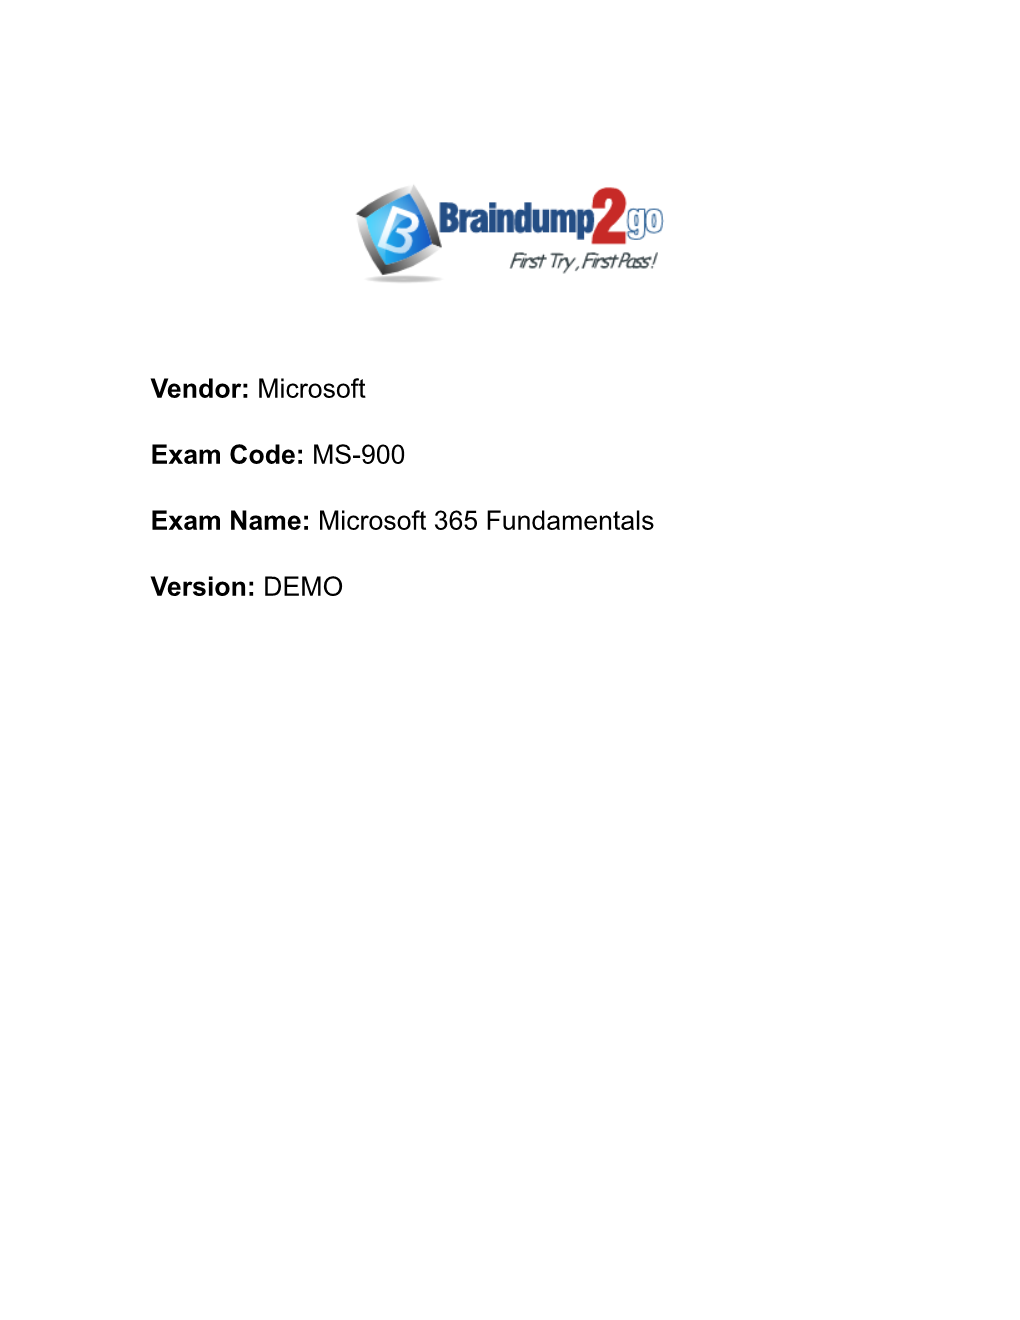 MS-900 Exam Name: Microsoft 365 Fundamentals Version: DEMO